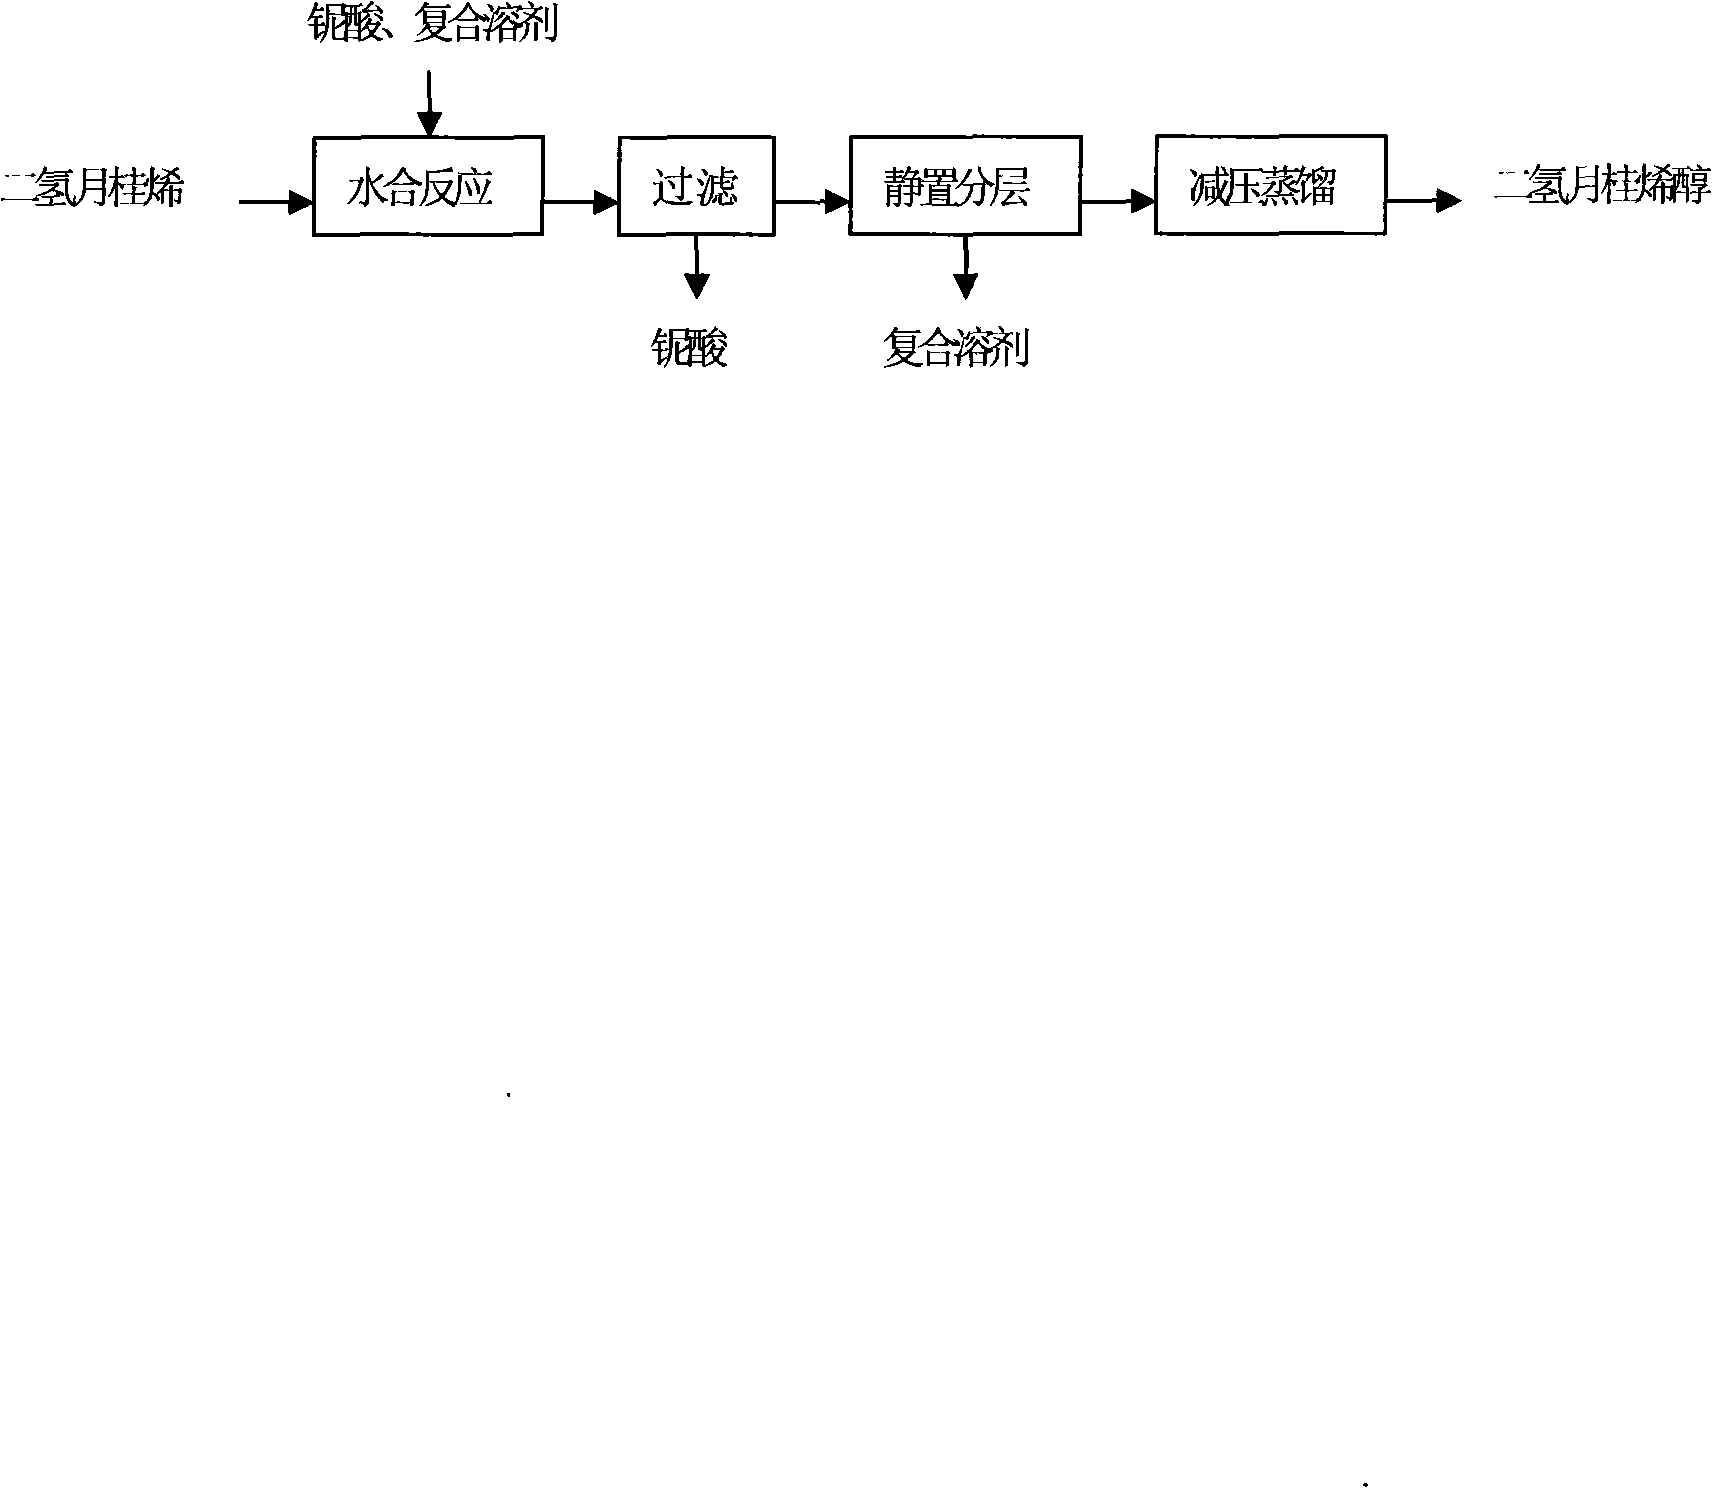 Method for method for synthesizing dihydromyrcenol from dihydro laurene using niobic acid catalyst